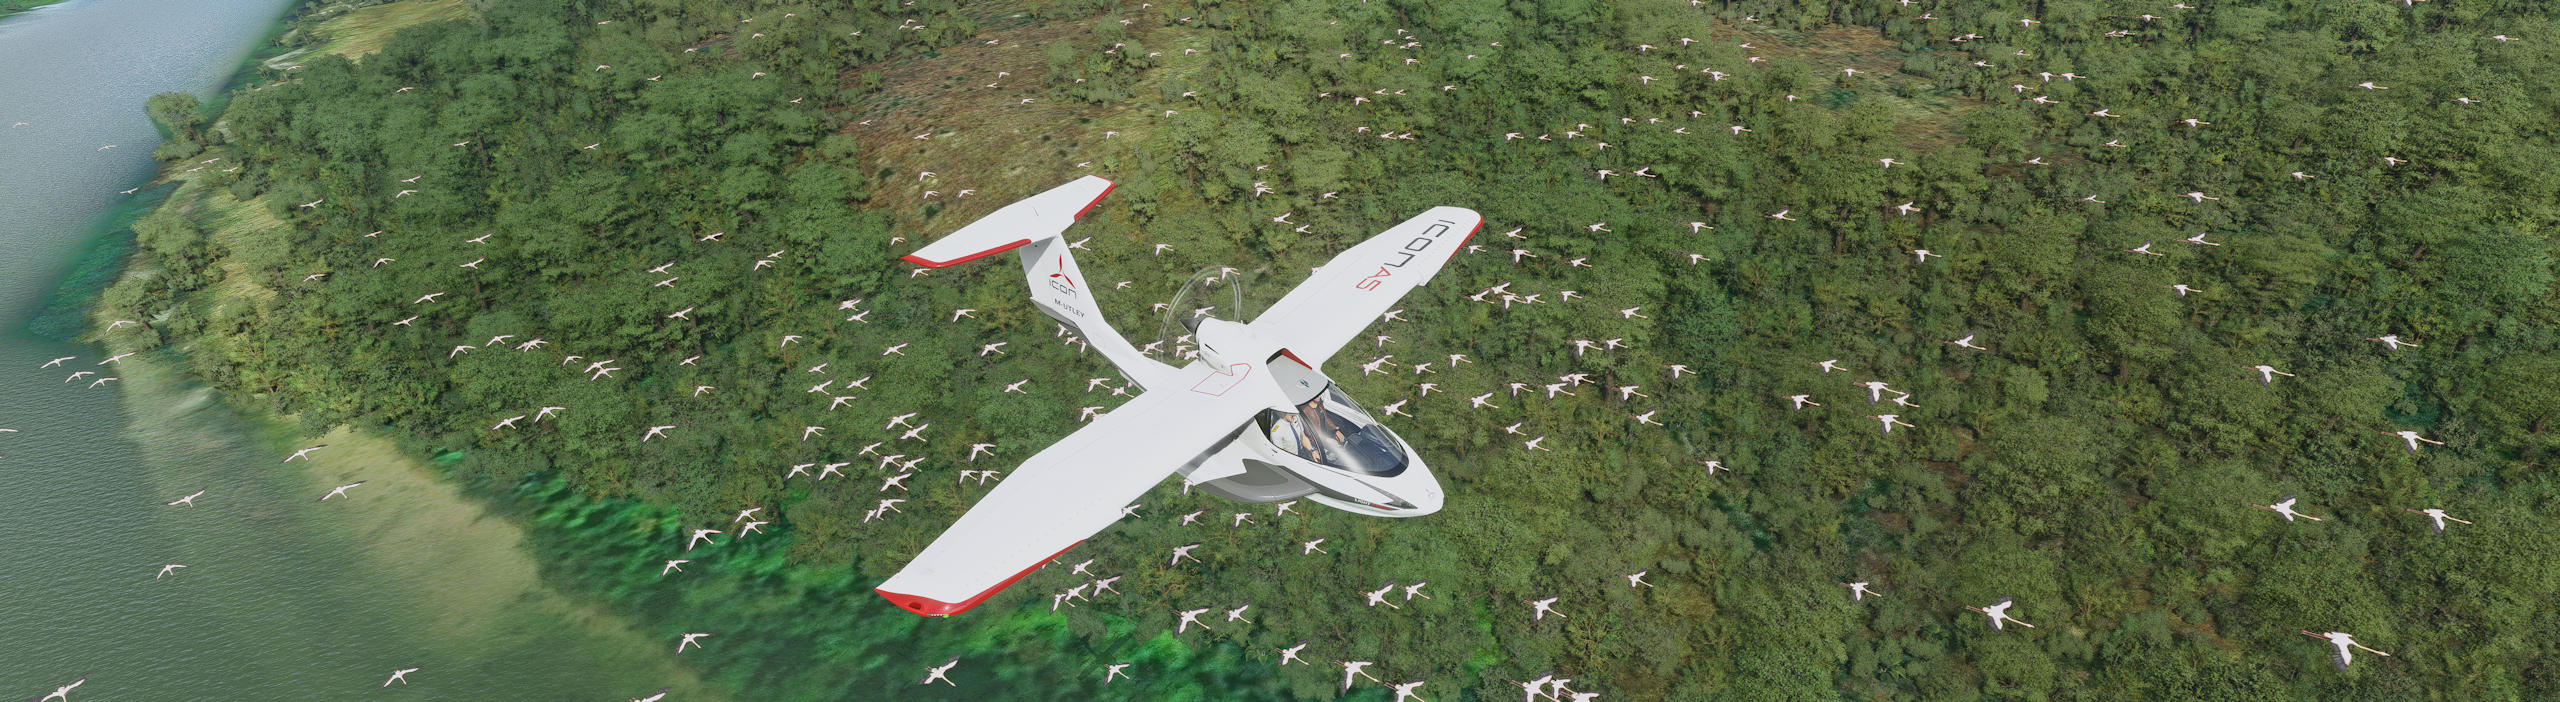 Drone FPV racer by Pilot Experience Sim - Aircraft - Microsoft Flight  Simulator Forums